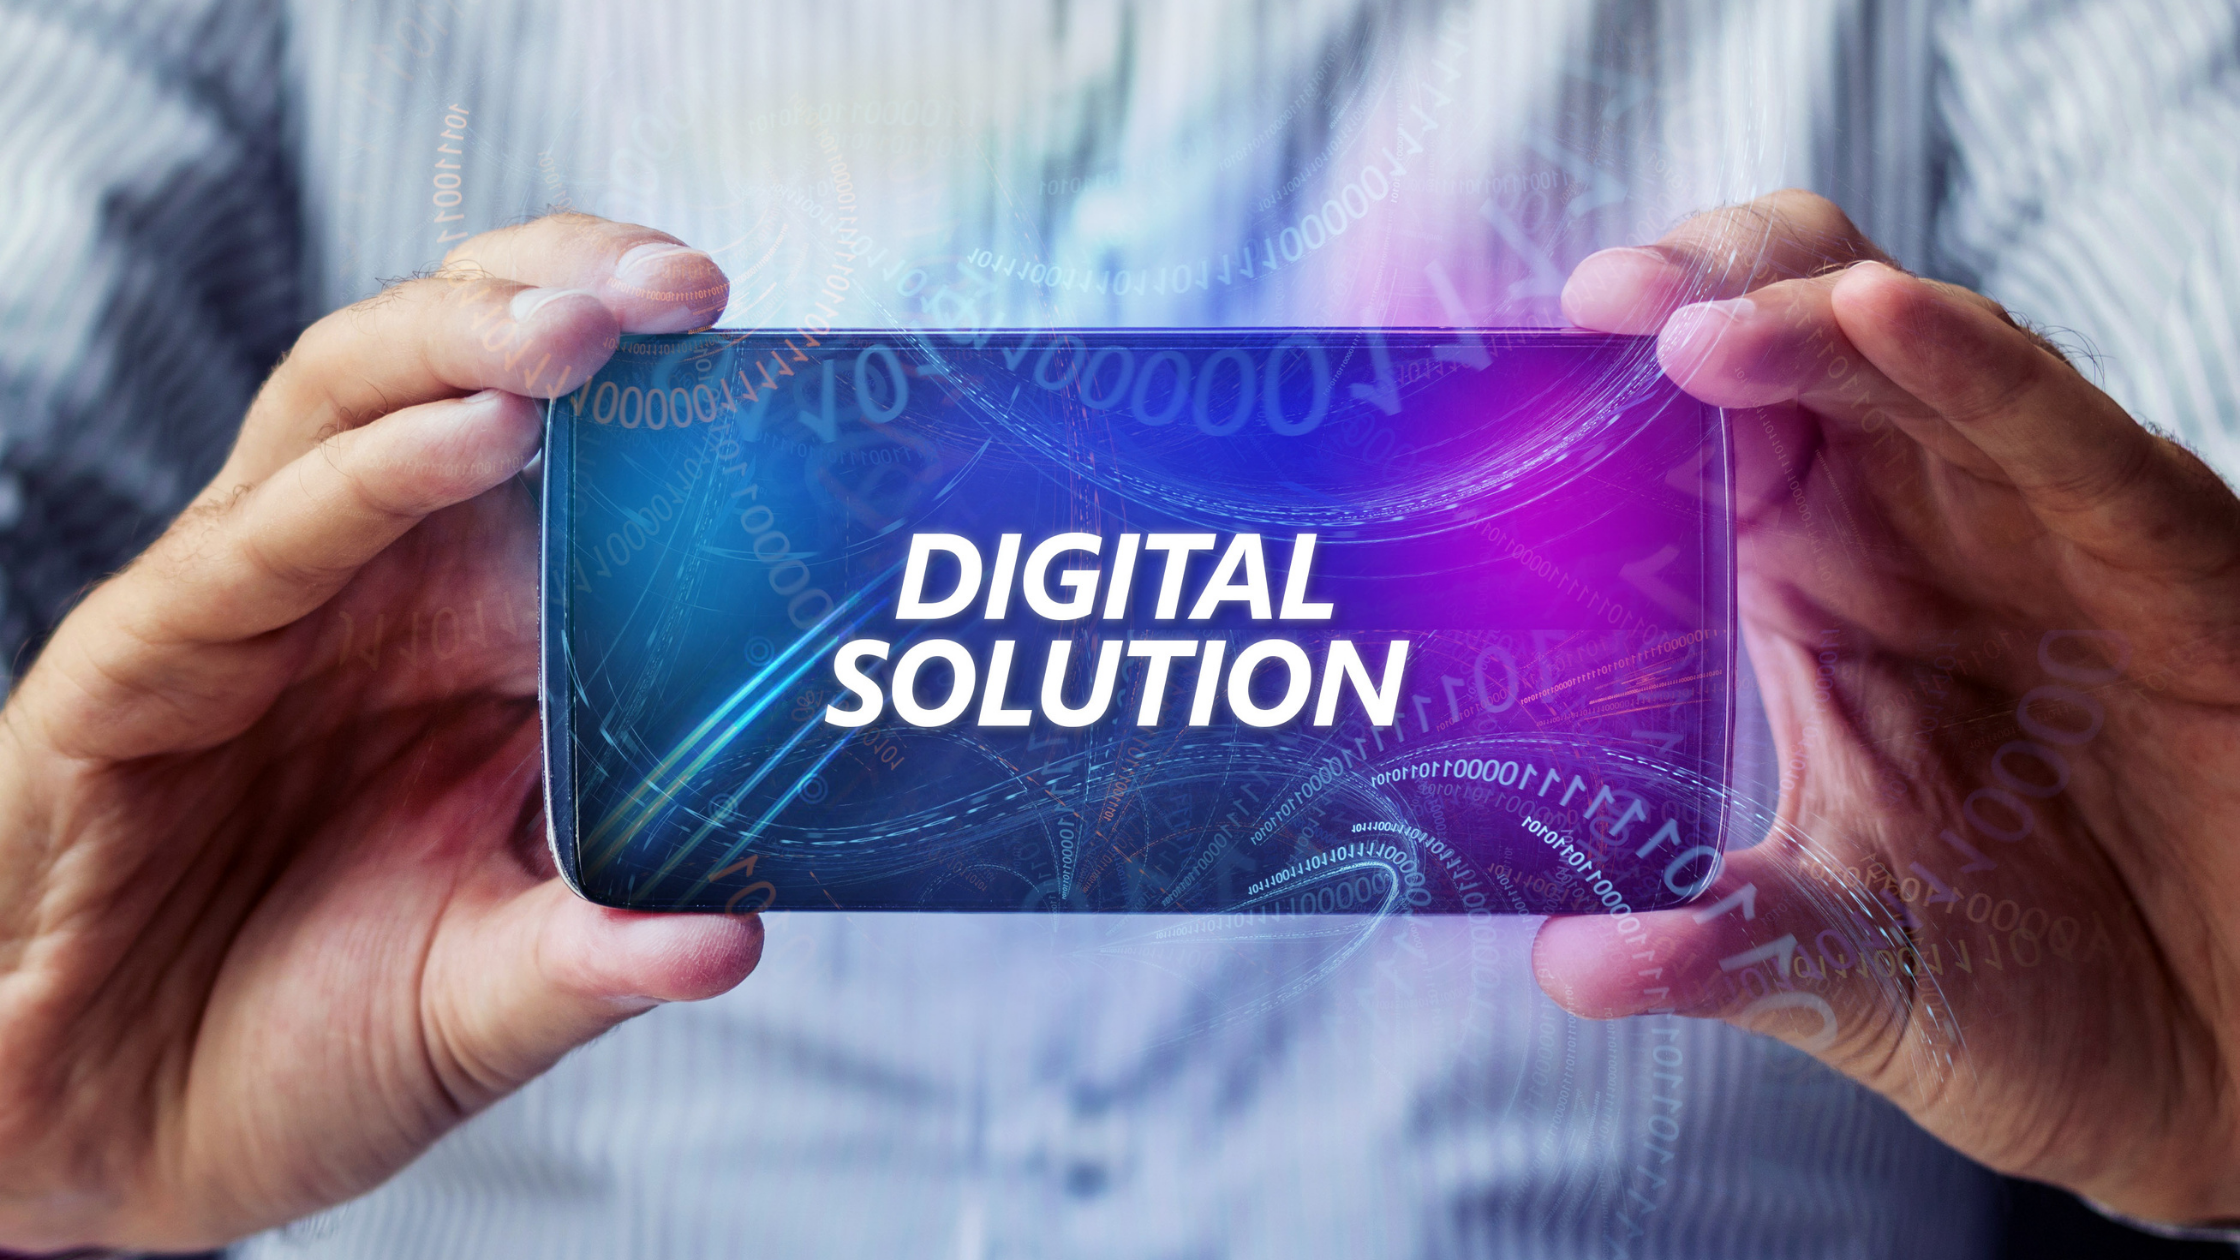 Digital solution on mobile phone against common pitfalls